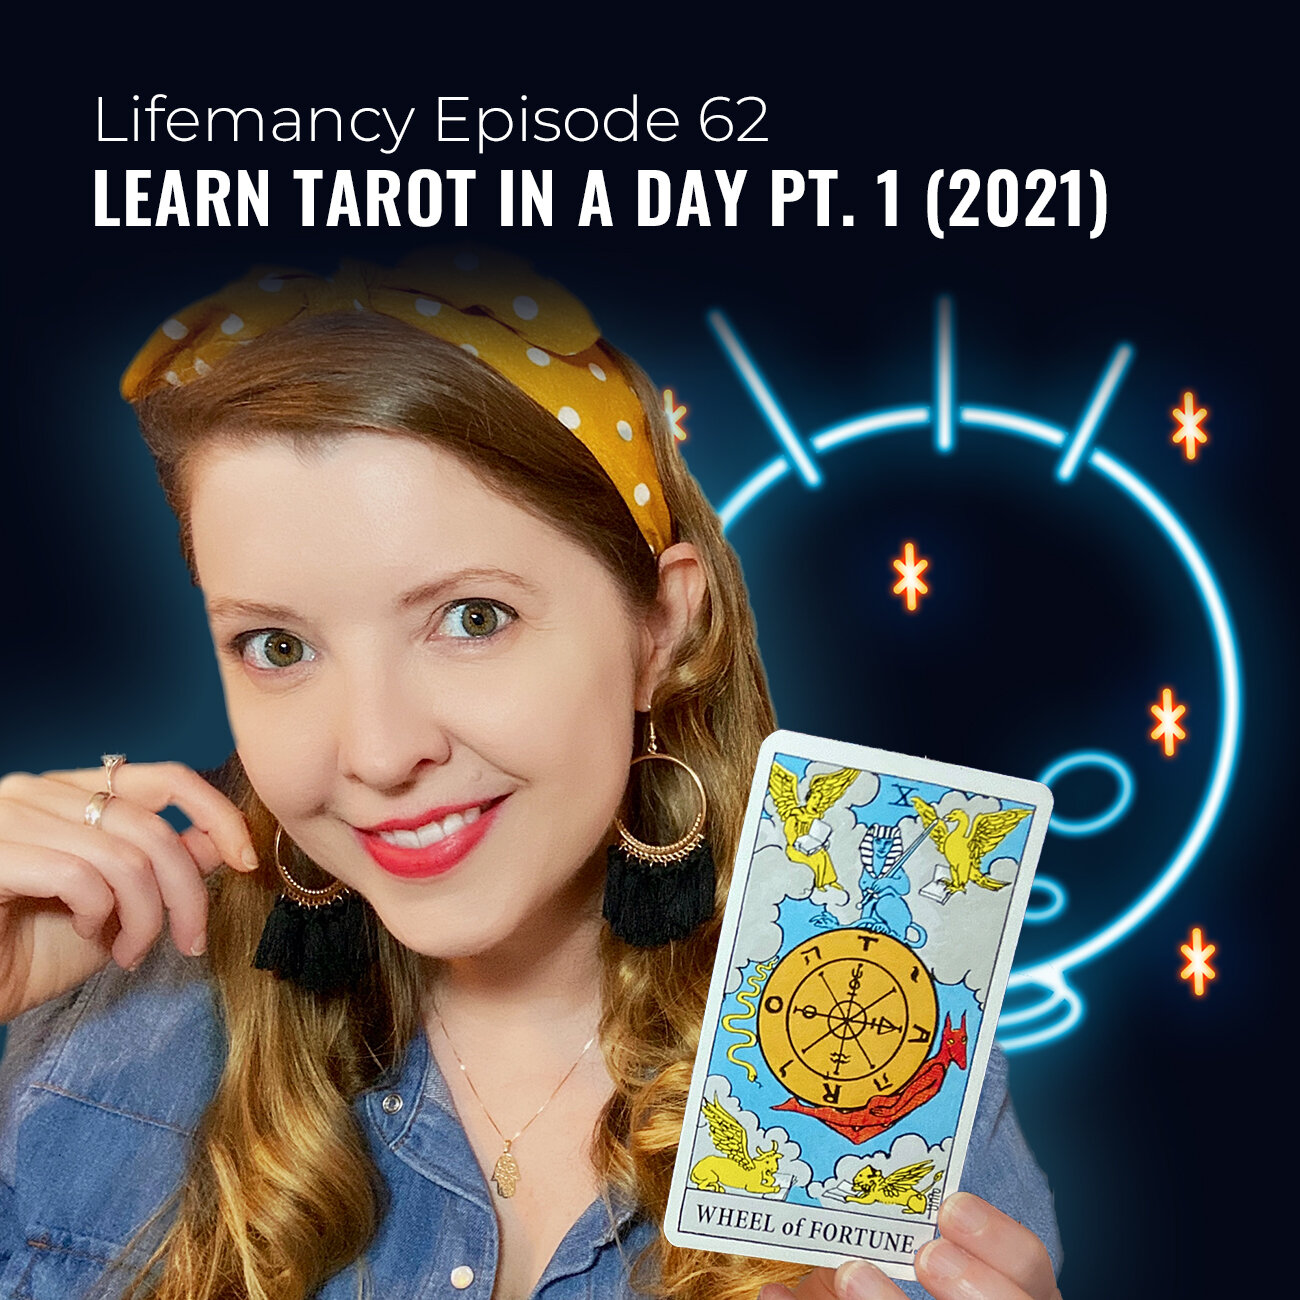 Learn Tarot in a Day Pt. 1 (2021) — LIFEMANCY